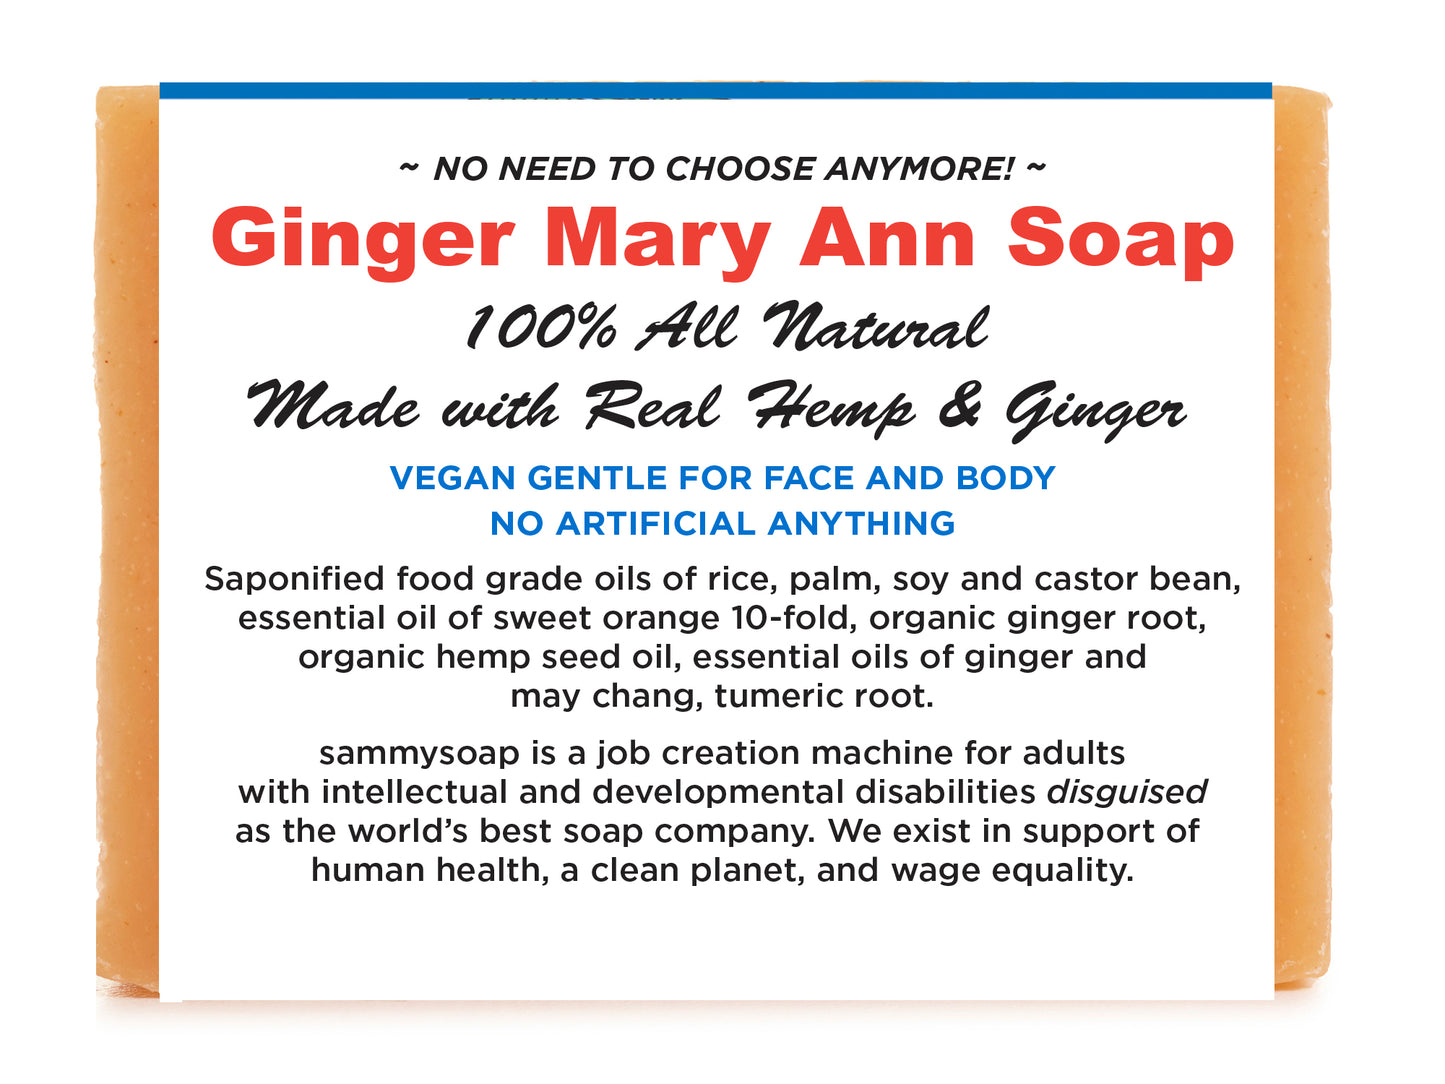 Ginger or Mary Ann?